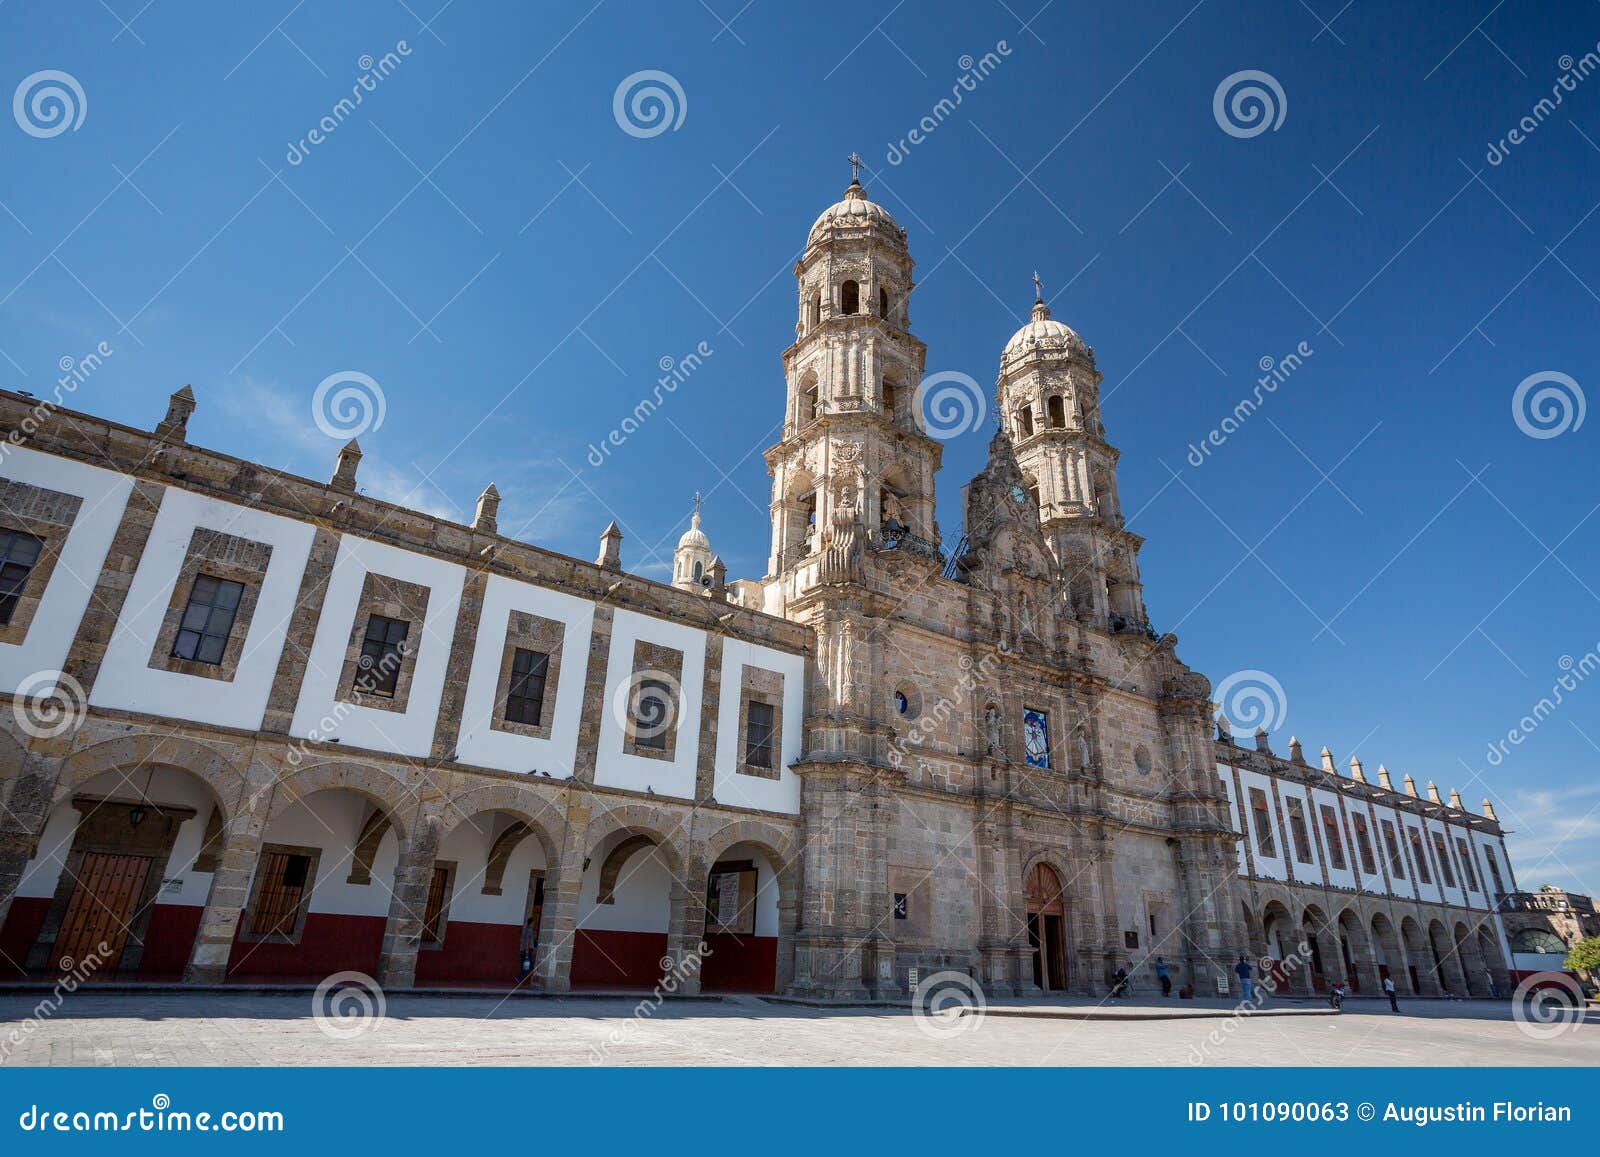 plaza de las americas and church, zapopan, guadalajara, mexicoplaza de las americas and church, zapopan, guadalajara, mexico